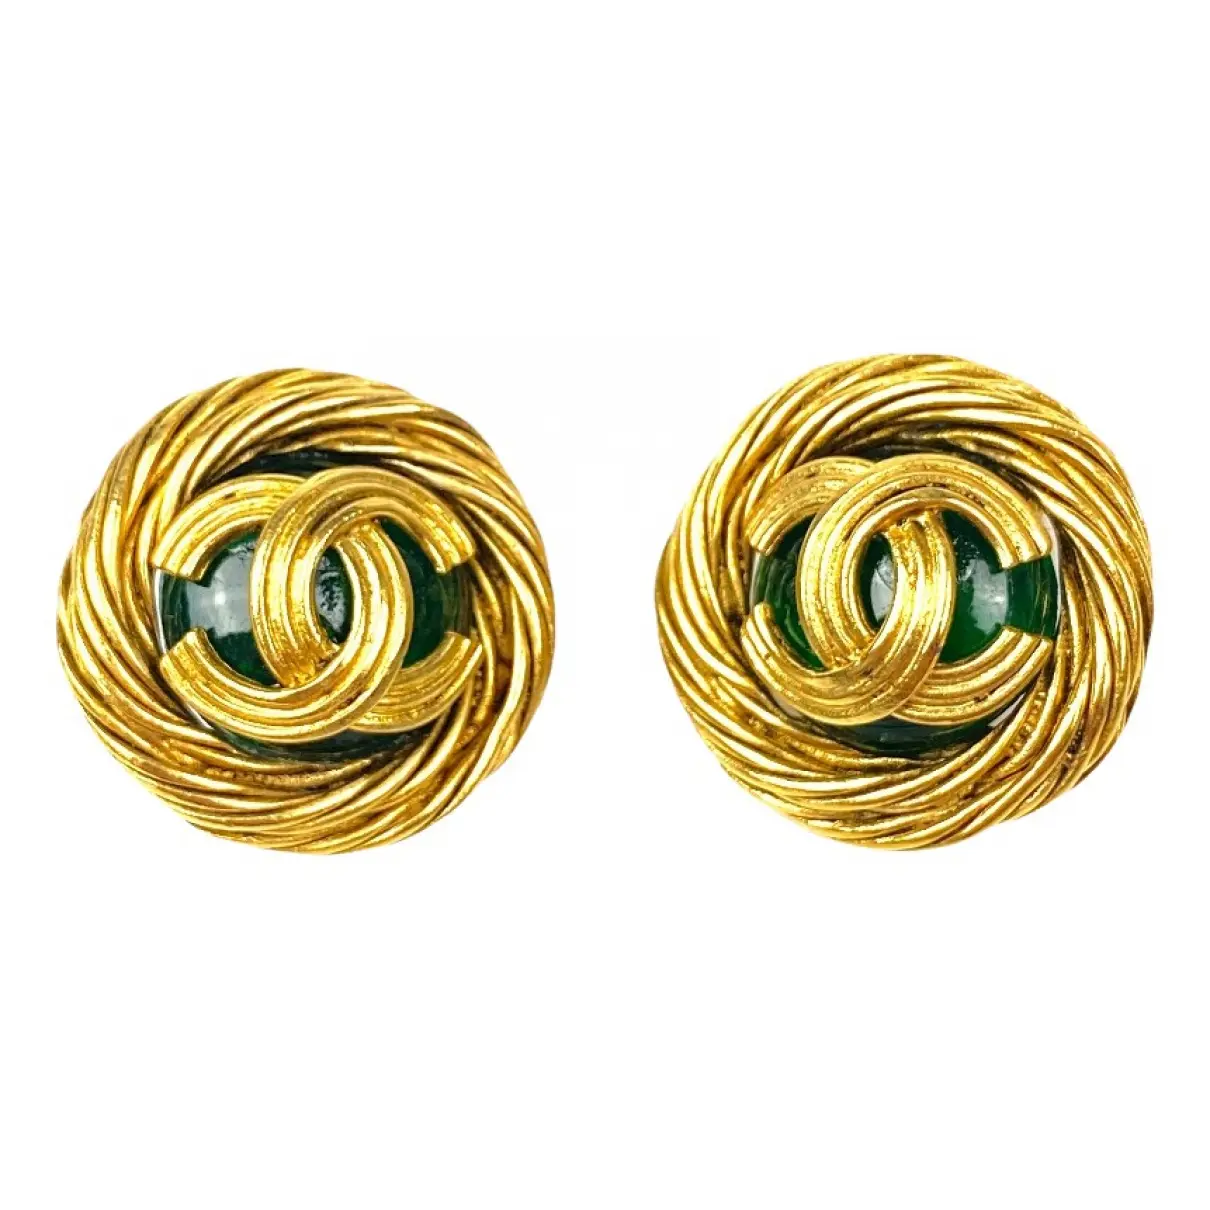 Yellow gold earrings Chanel